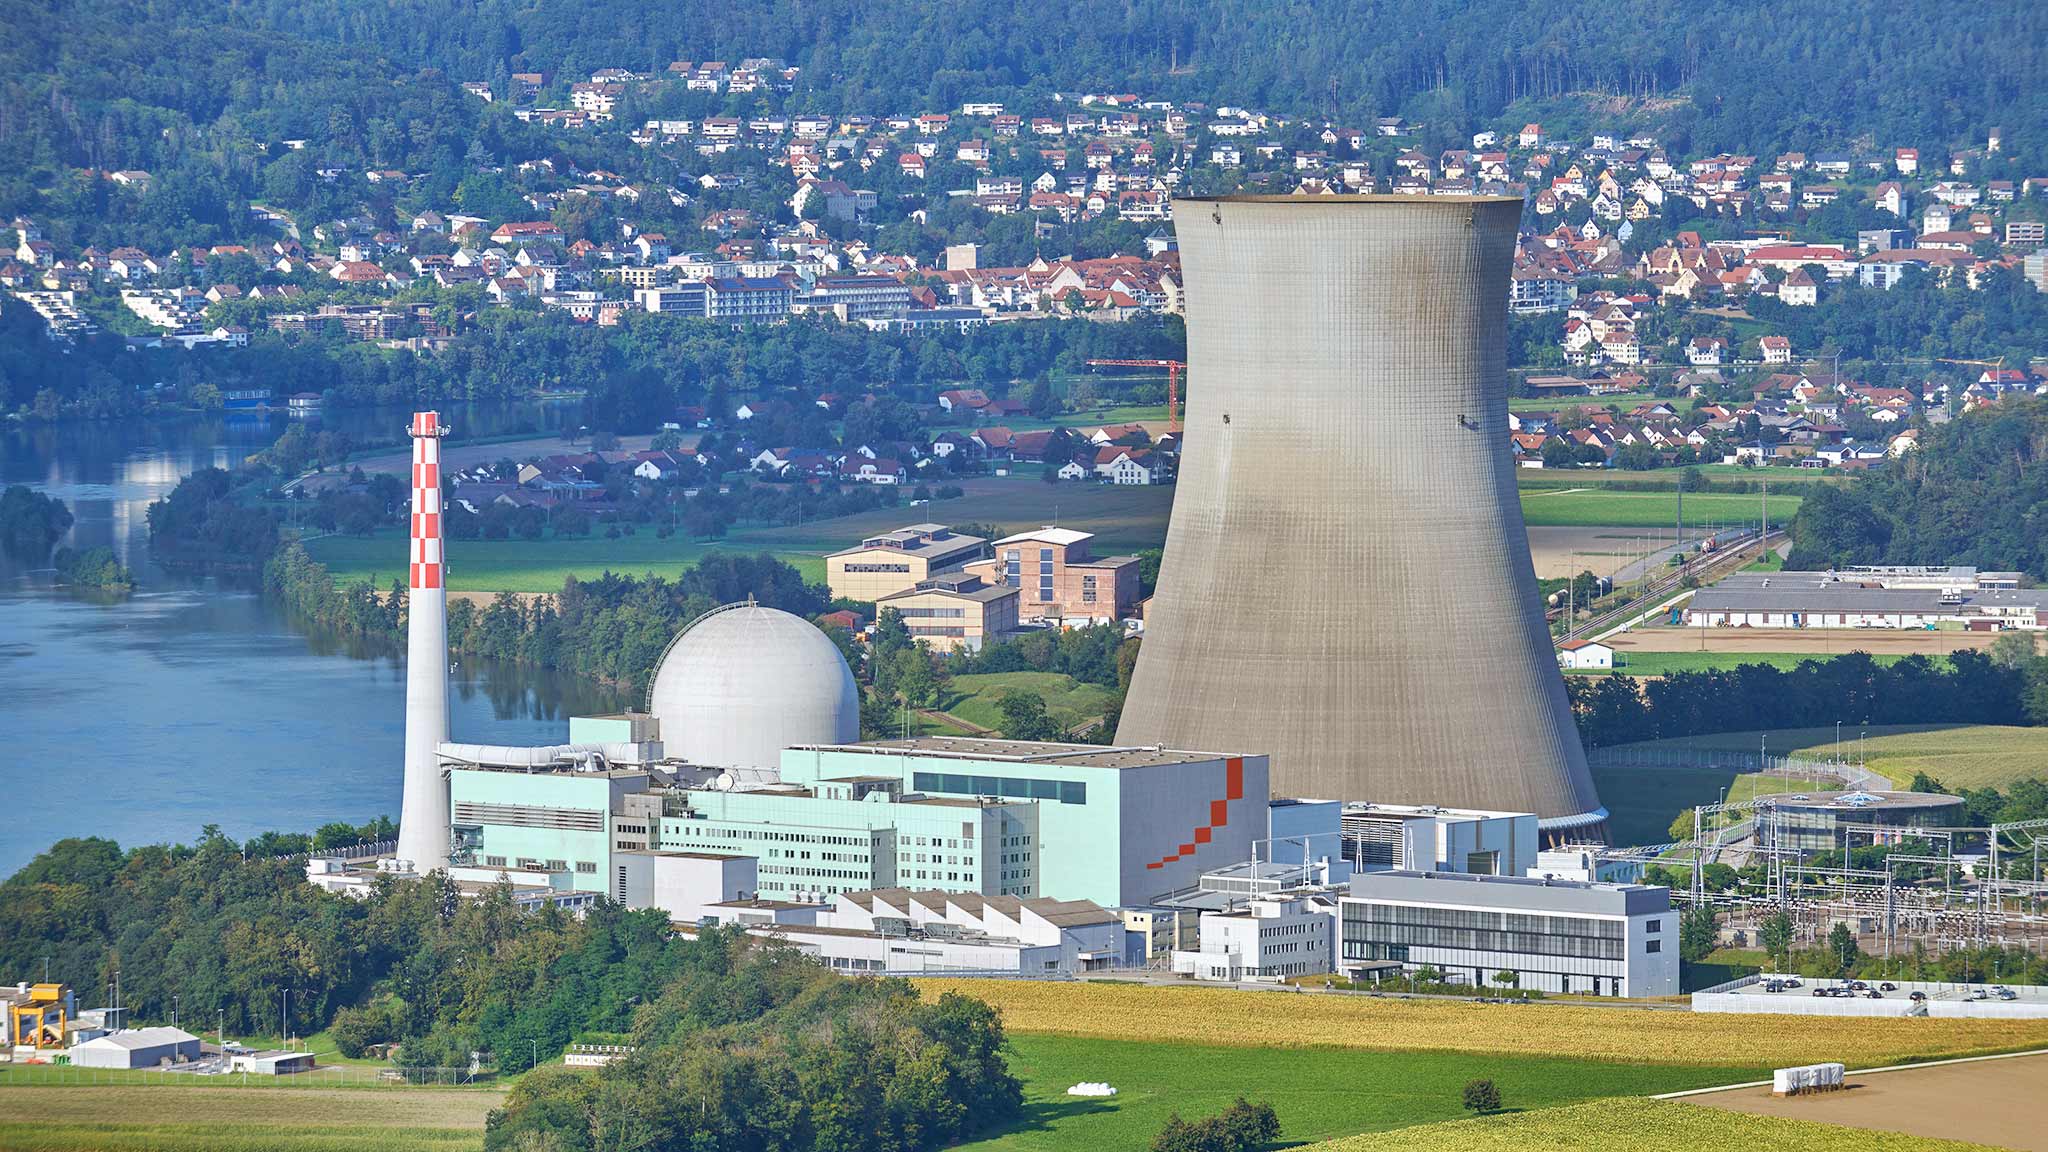 Kernkraftwerk Leibstadt mit Kühlturm